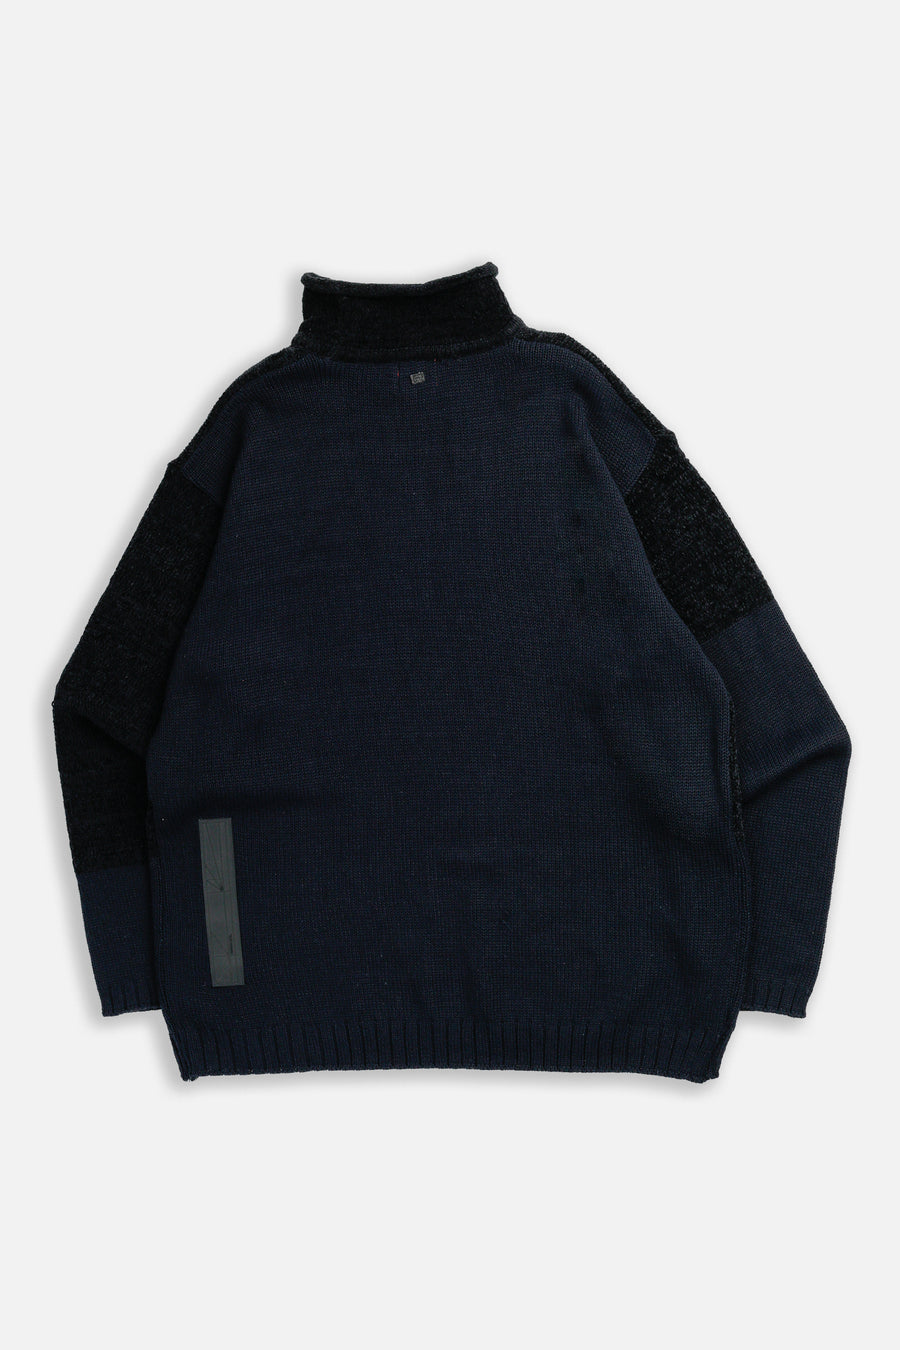 Vintage Ecko Knit Sweatshirt - XXL